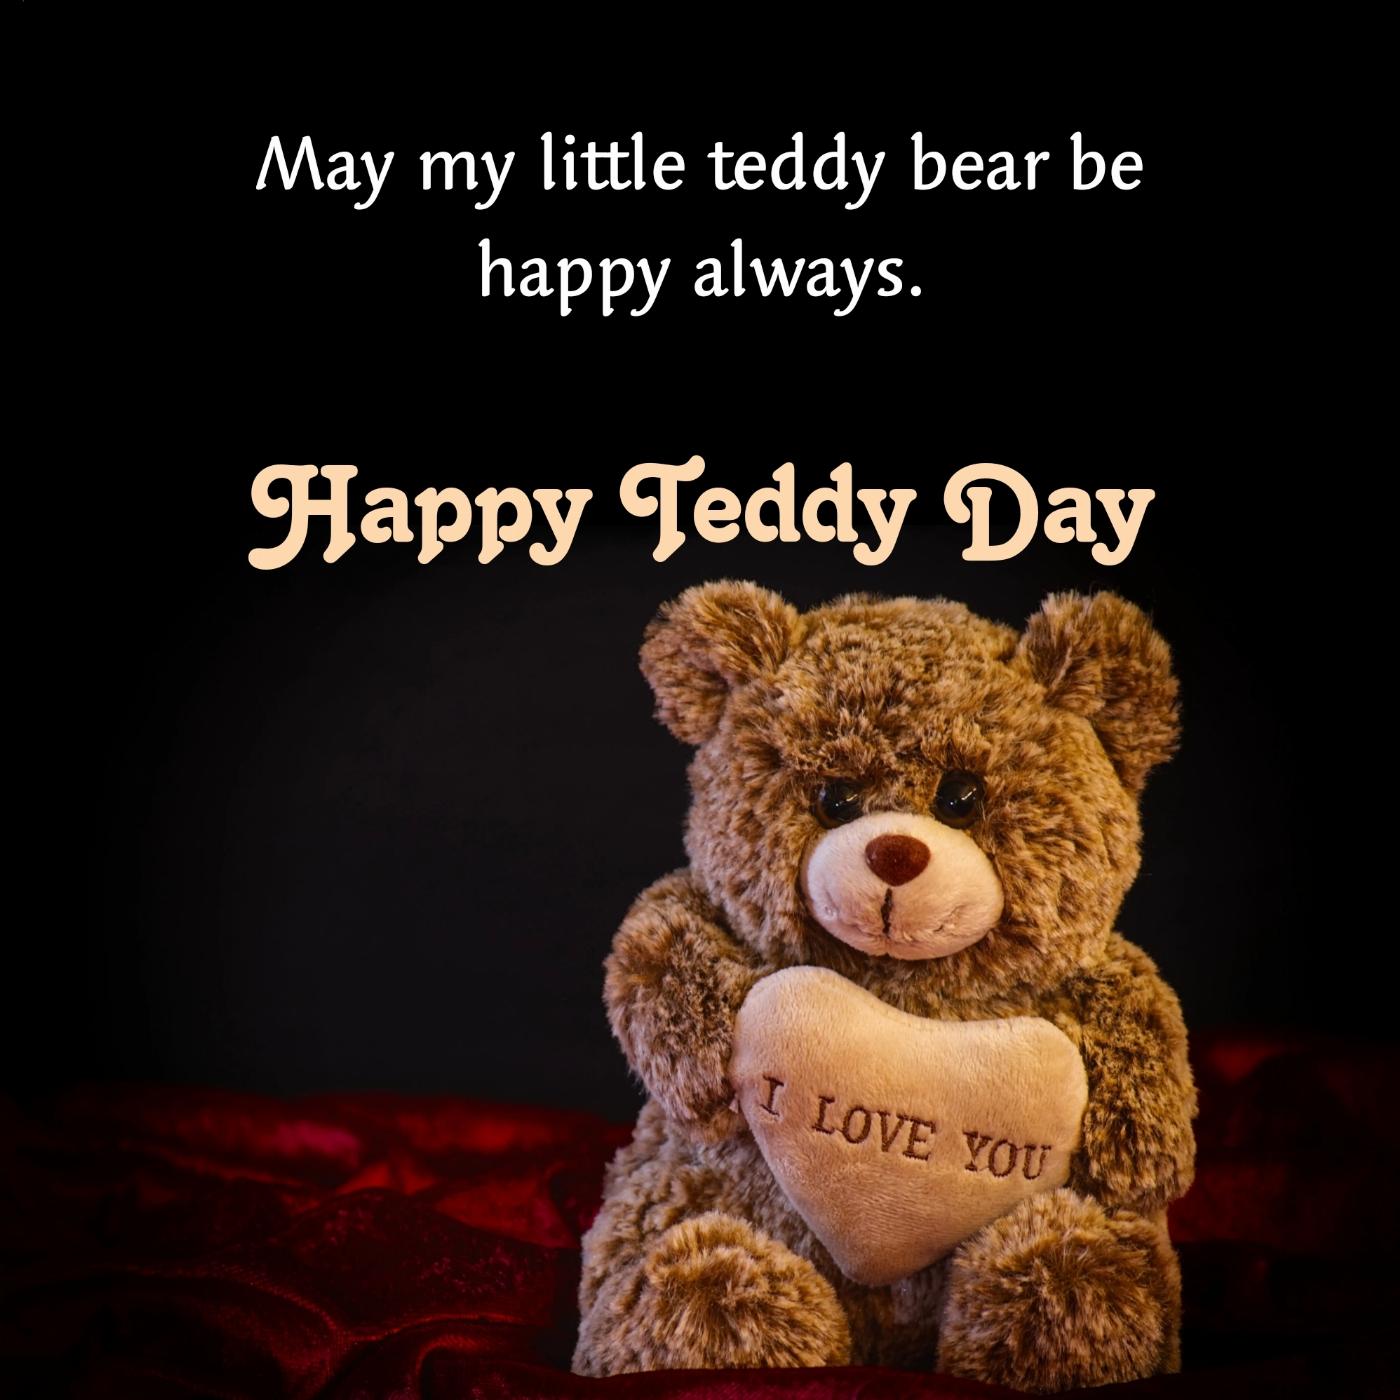 May my little teddy bear be happy always